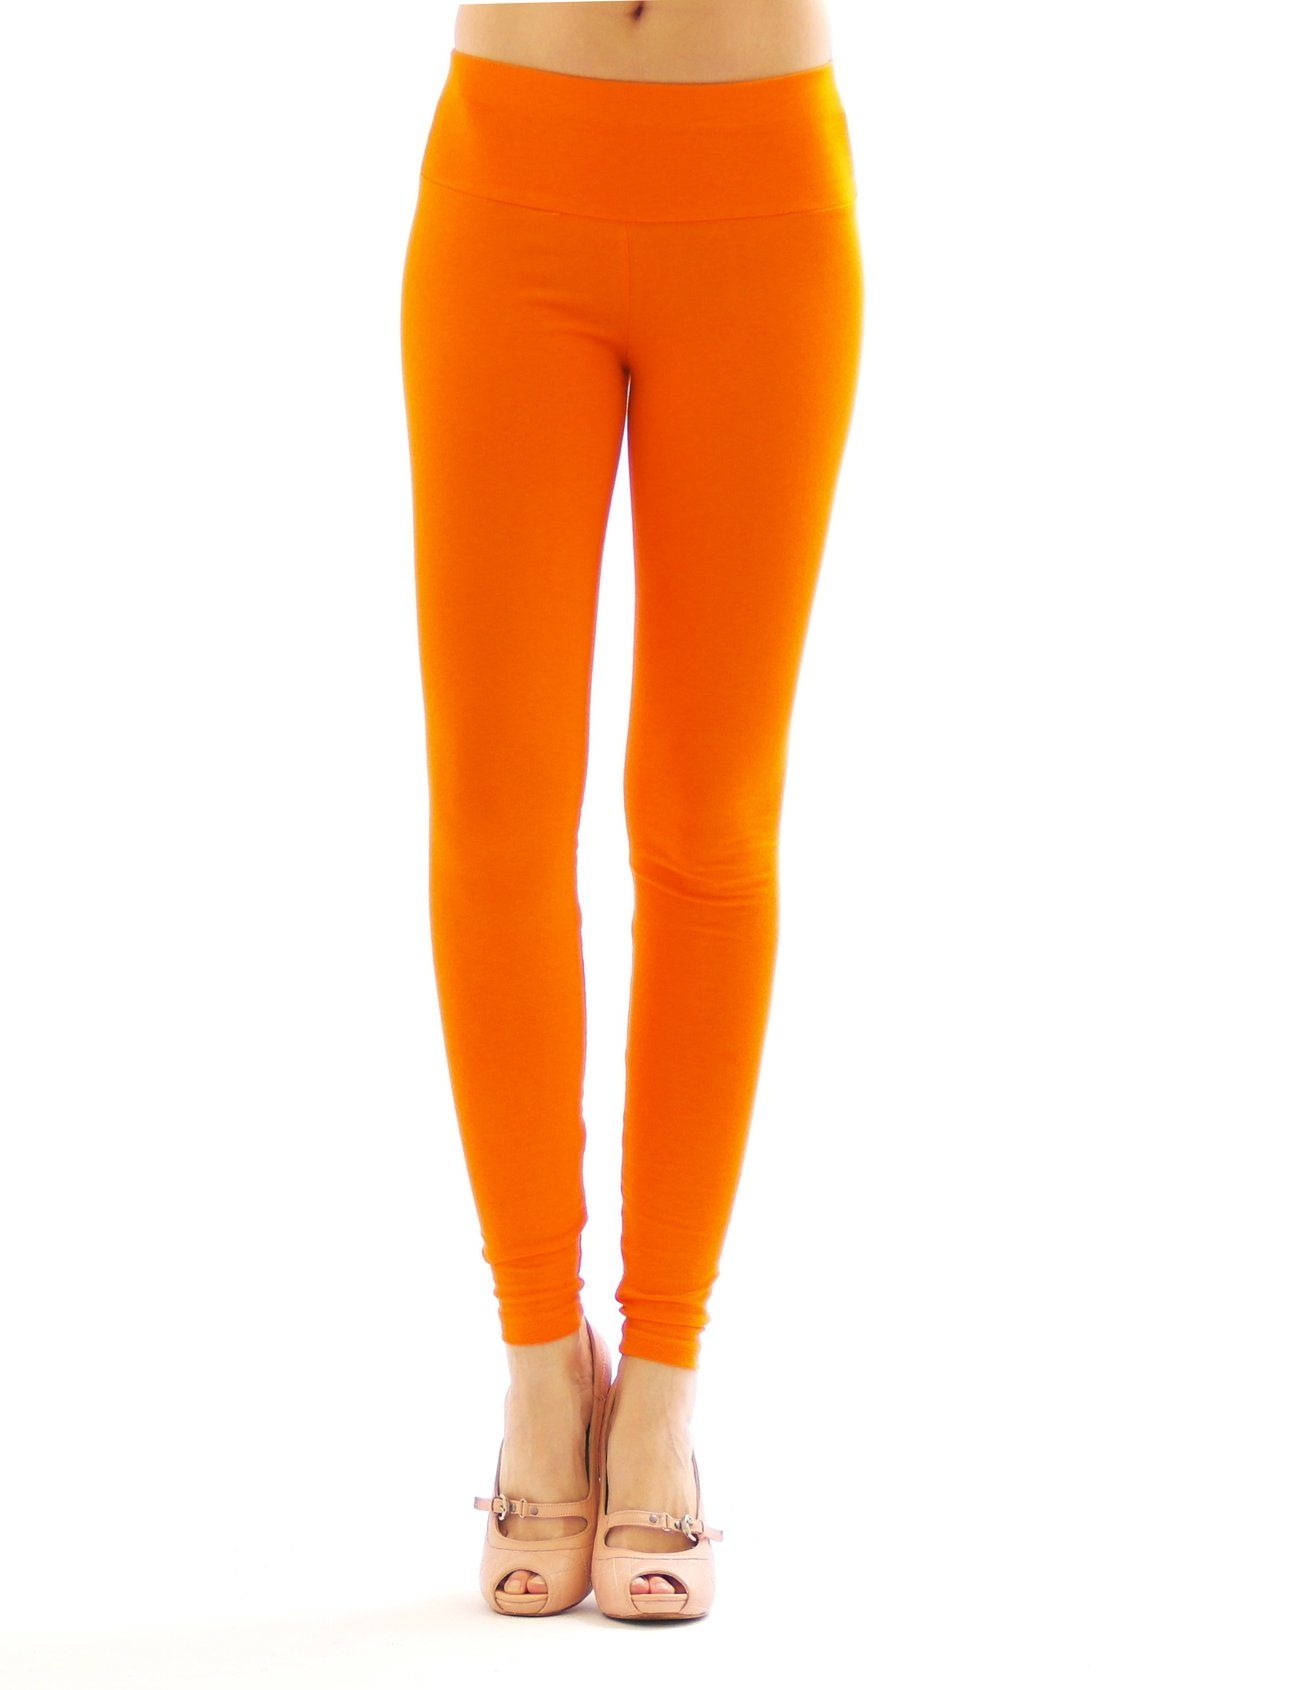 SYS Leggings Damen Leggings lang hoher Bund Baumwolle blickdicht Orange